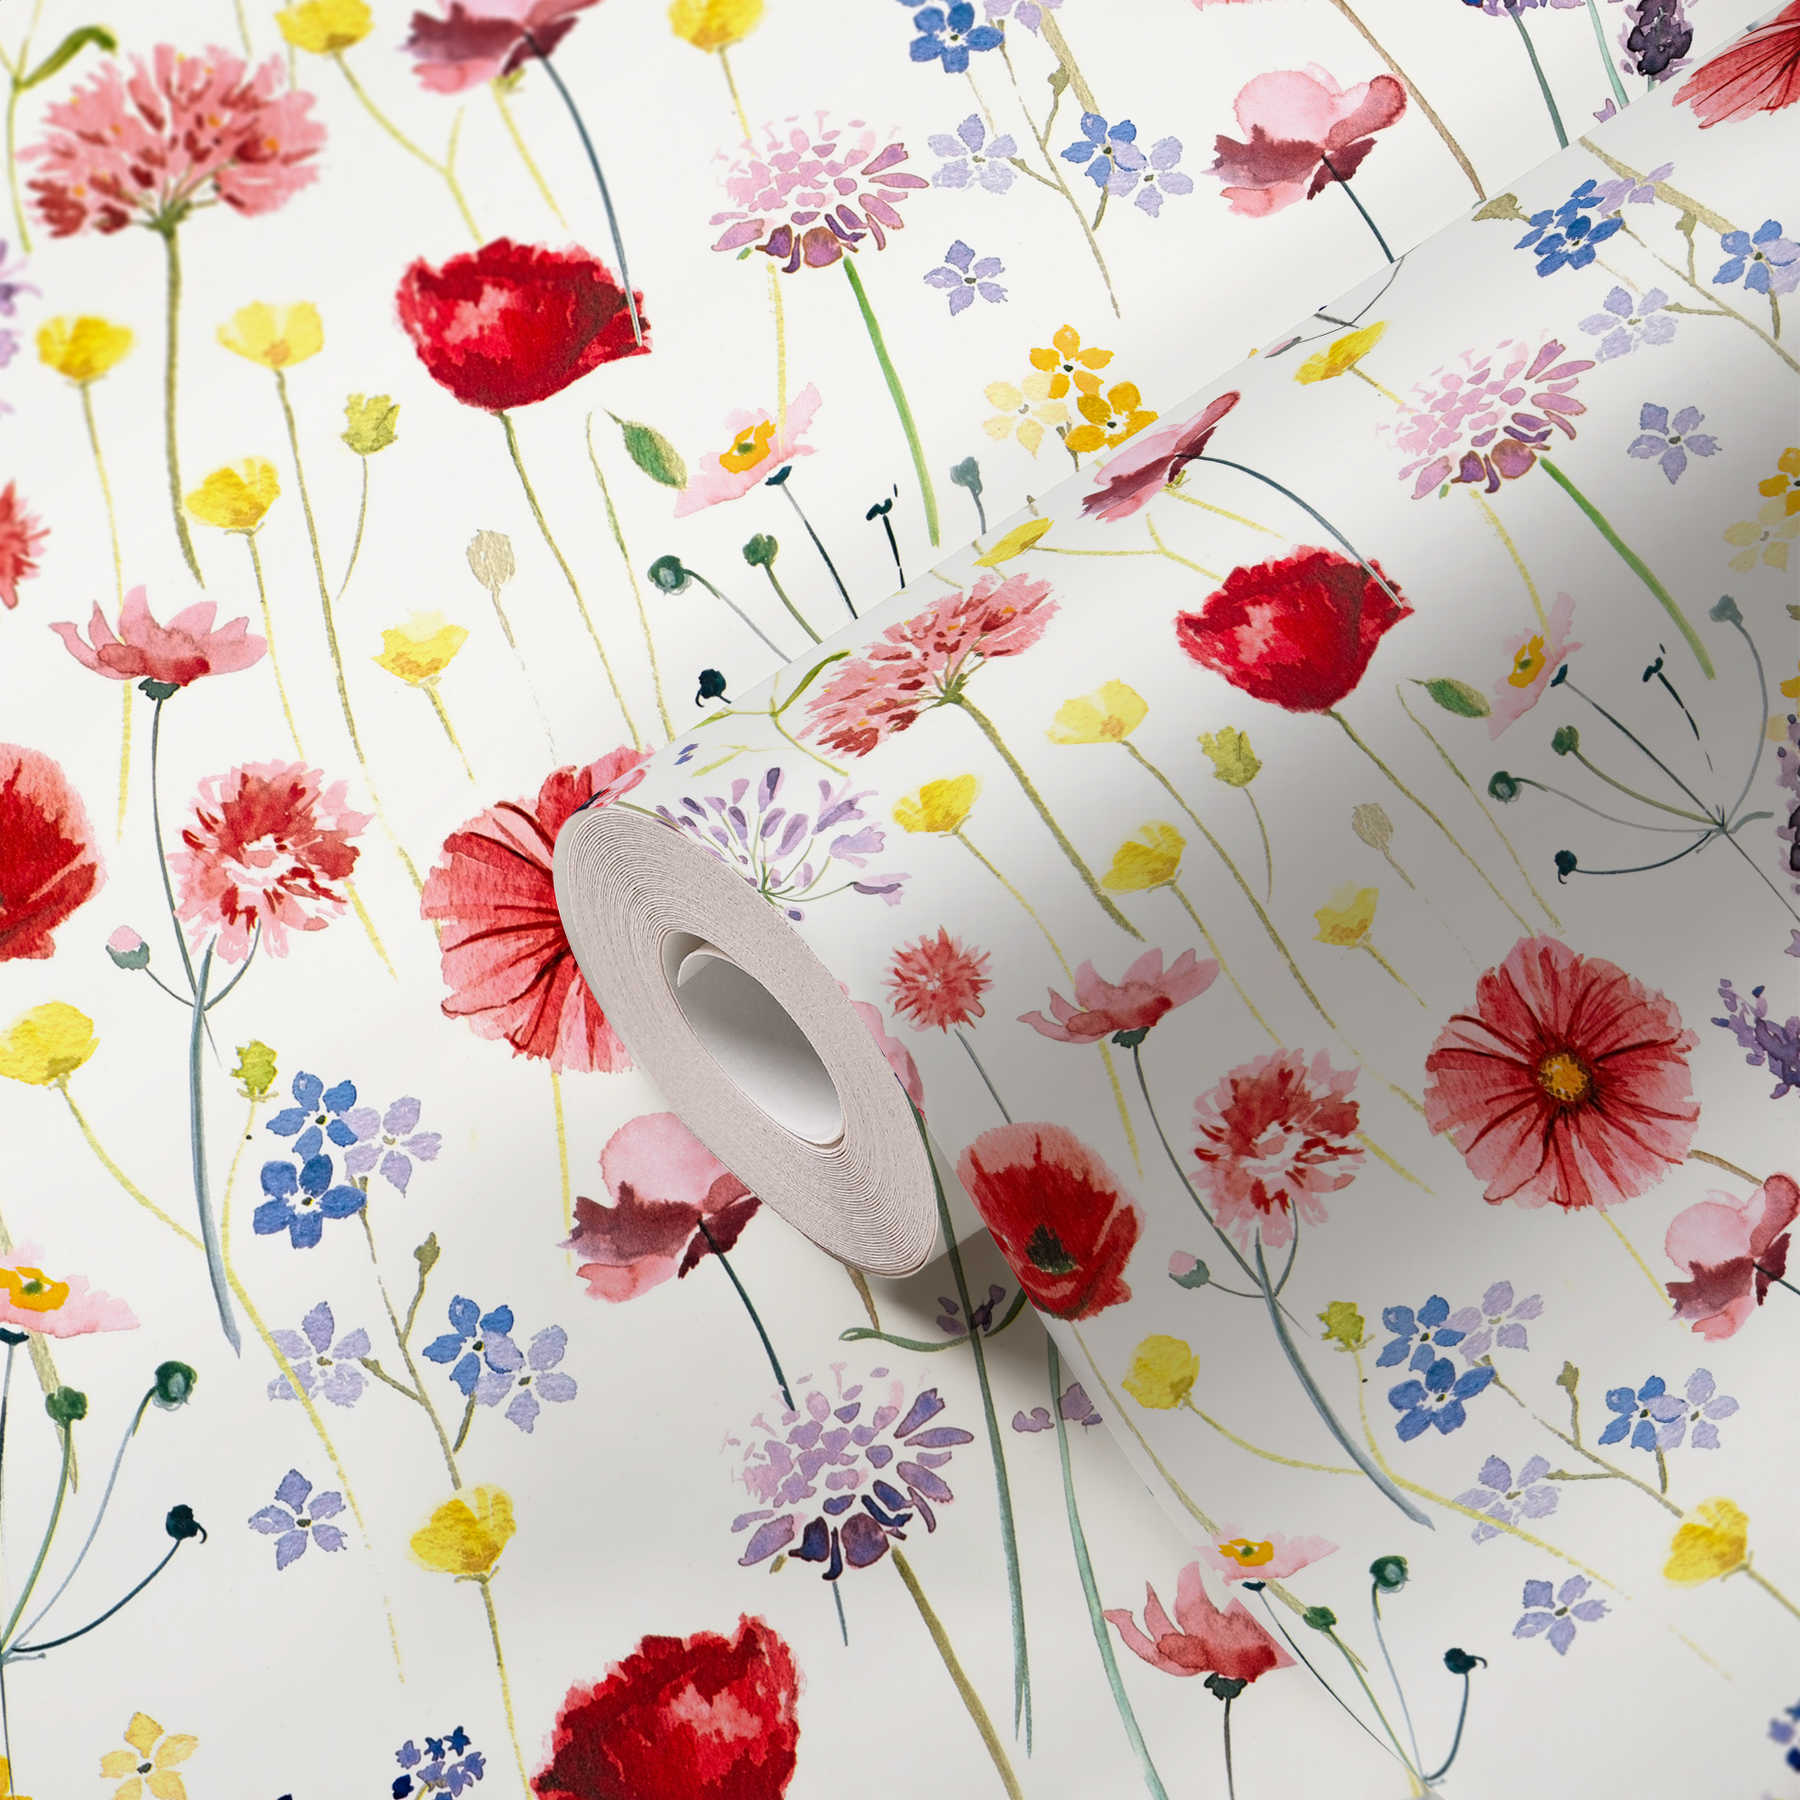             Blumen Papiertapete Blüten Aquarell – Bunt, Weiß
        